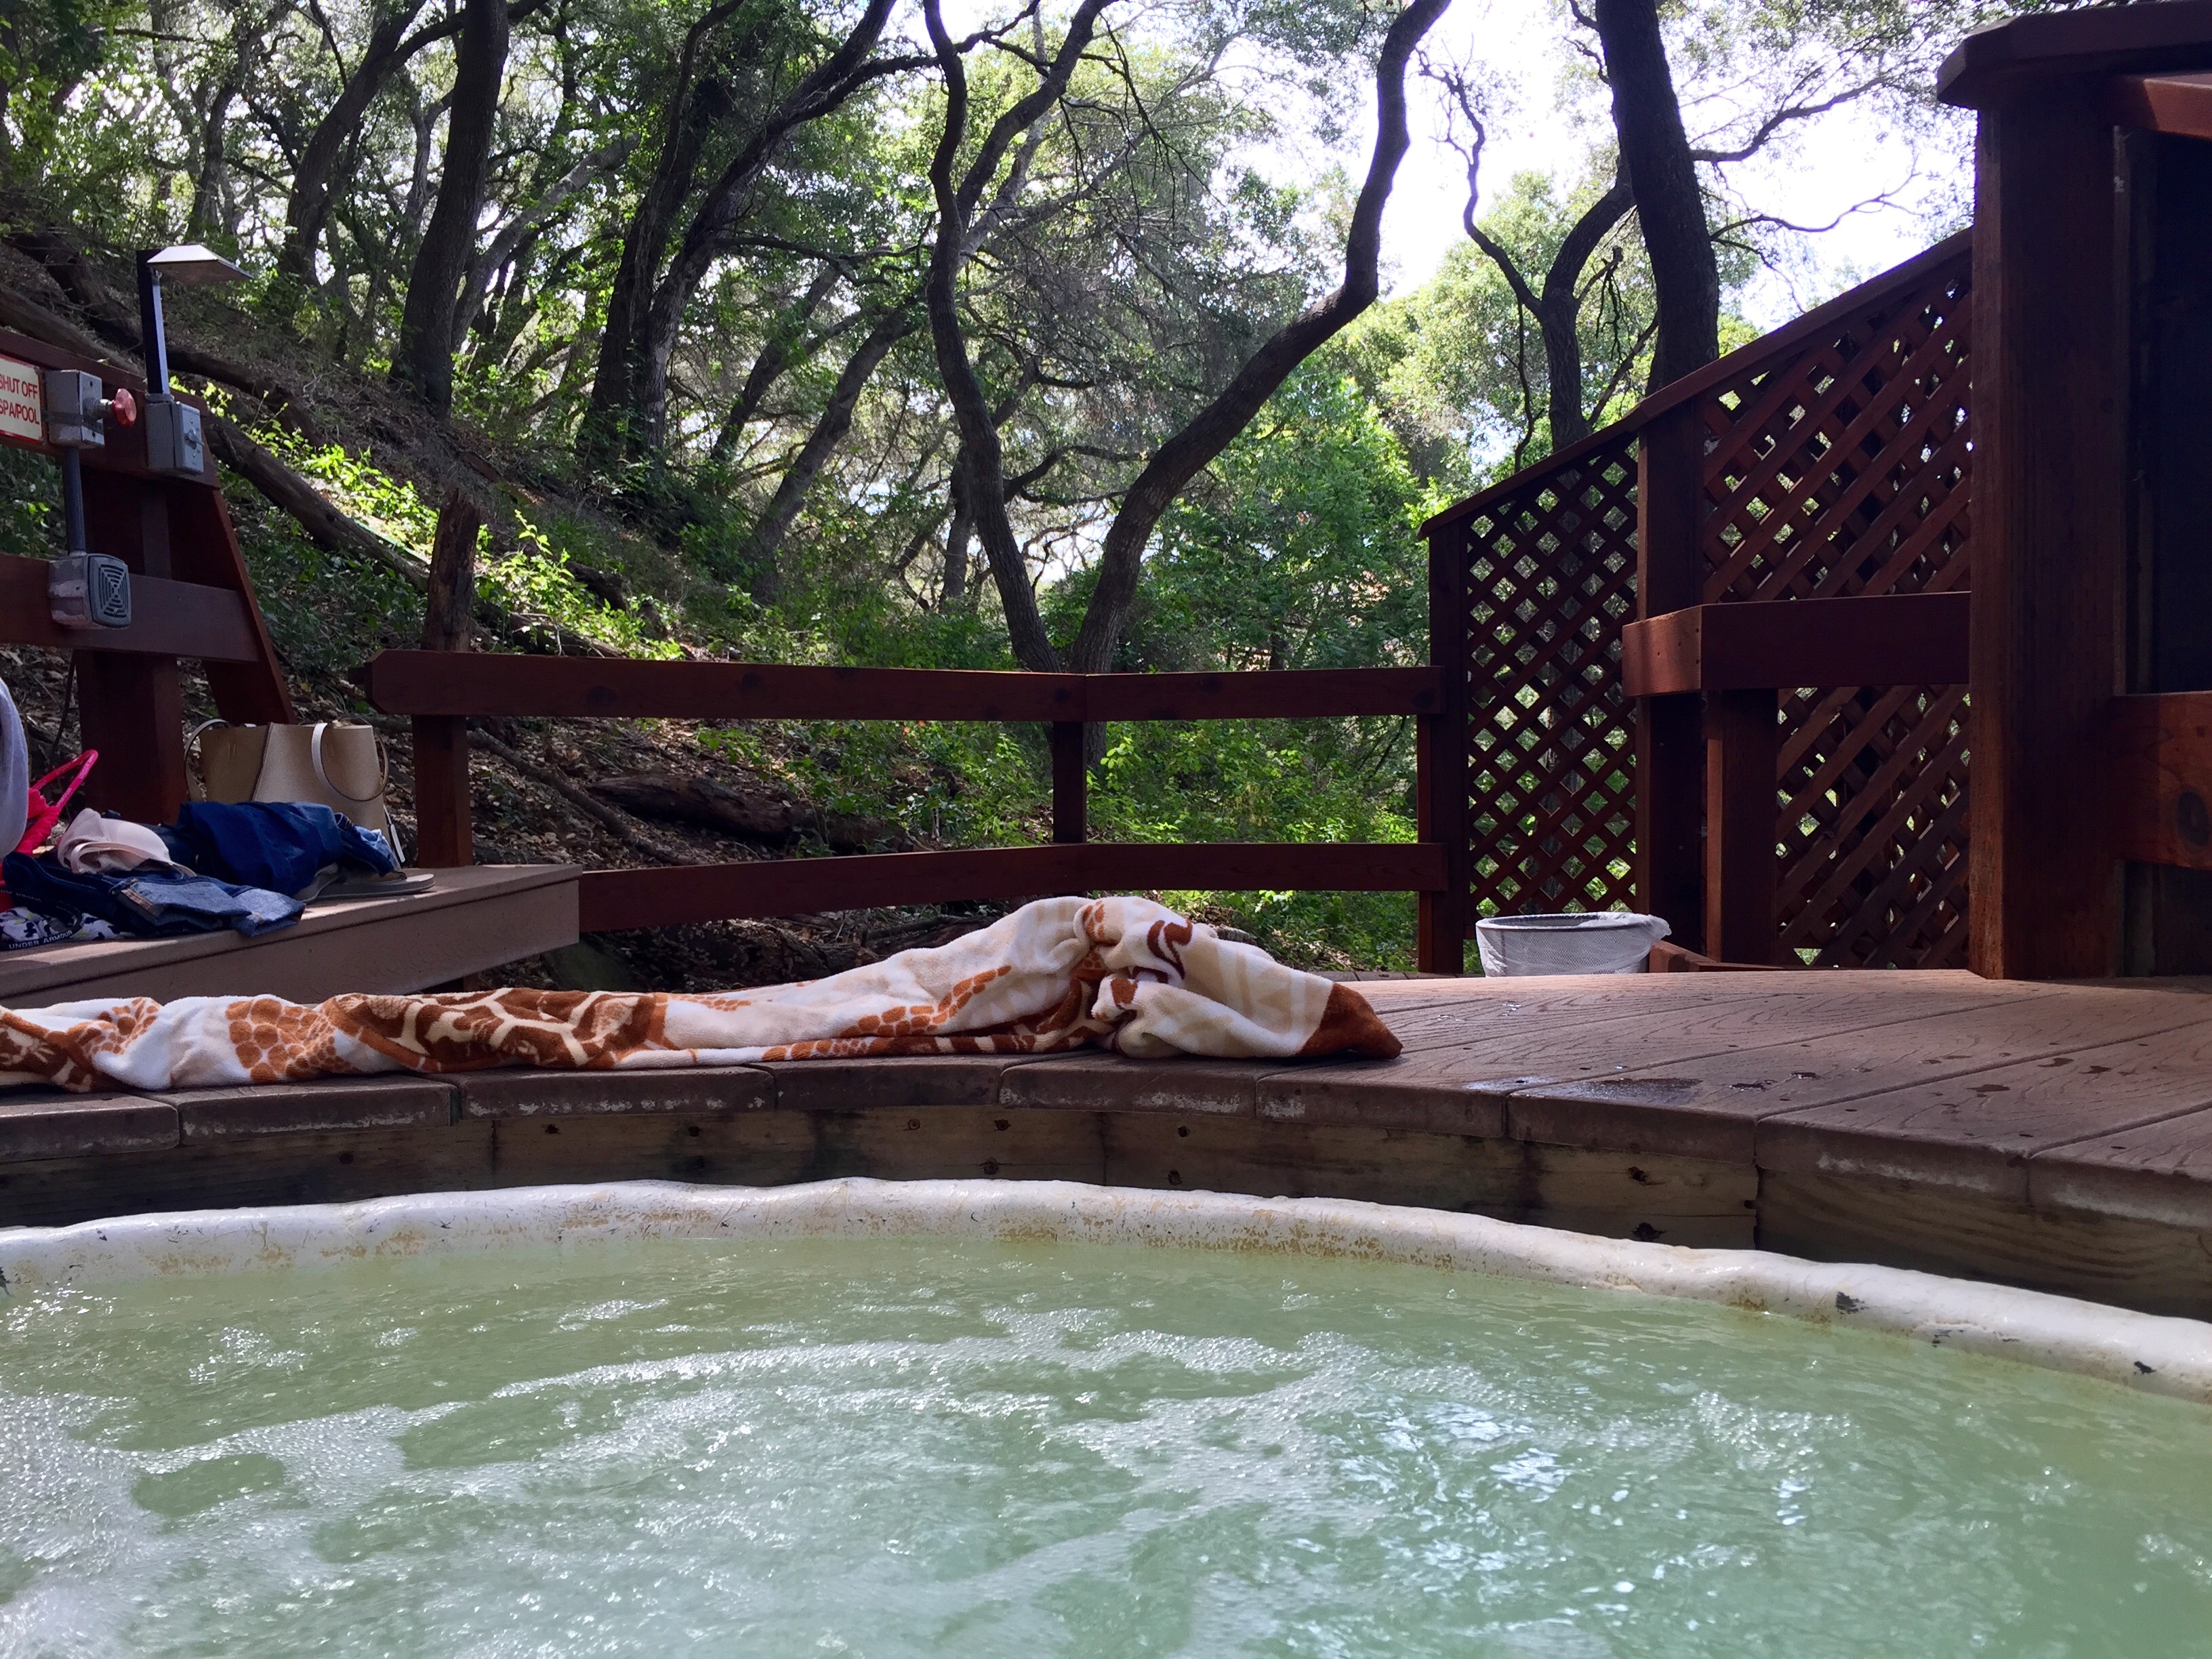 My view from "Xanadu" hot spring tub